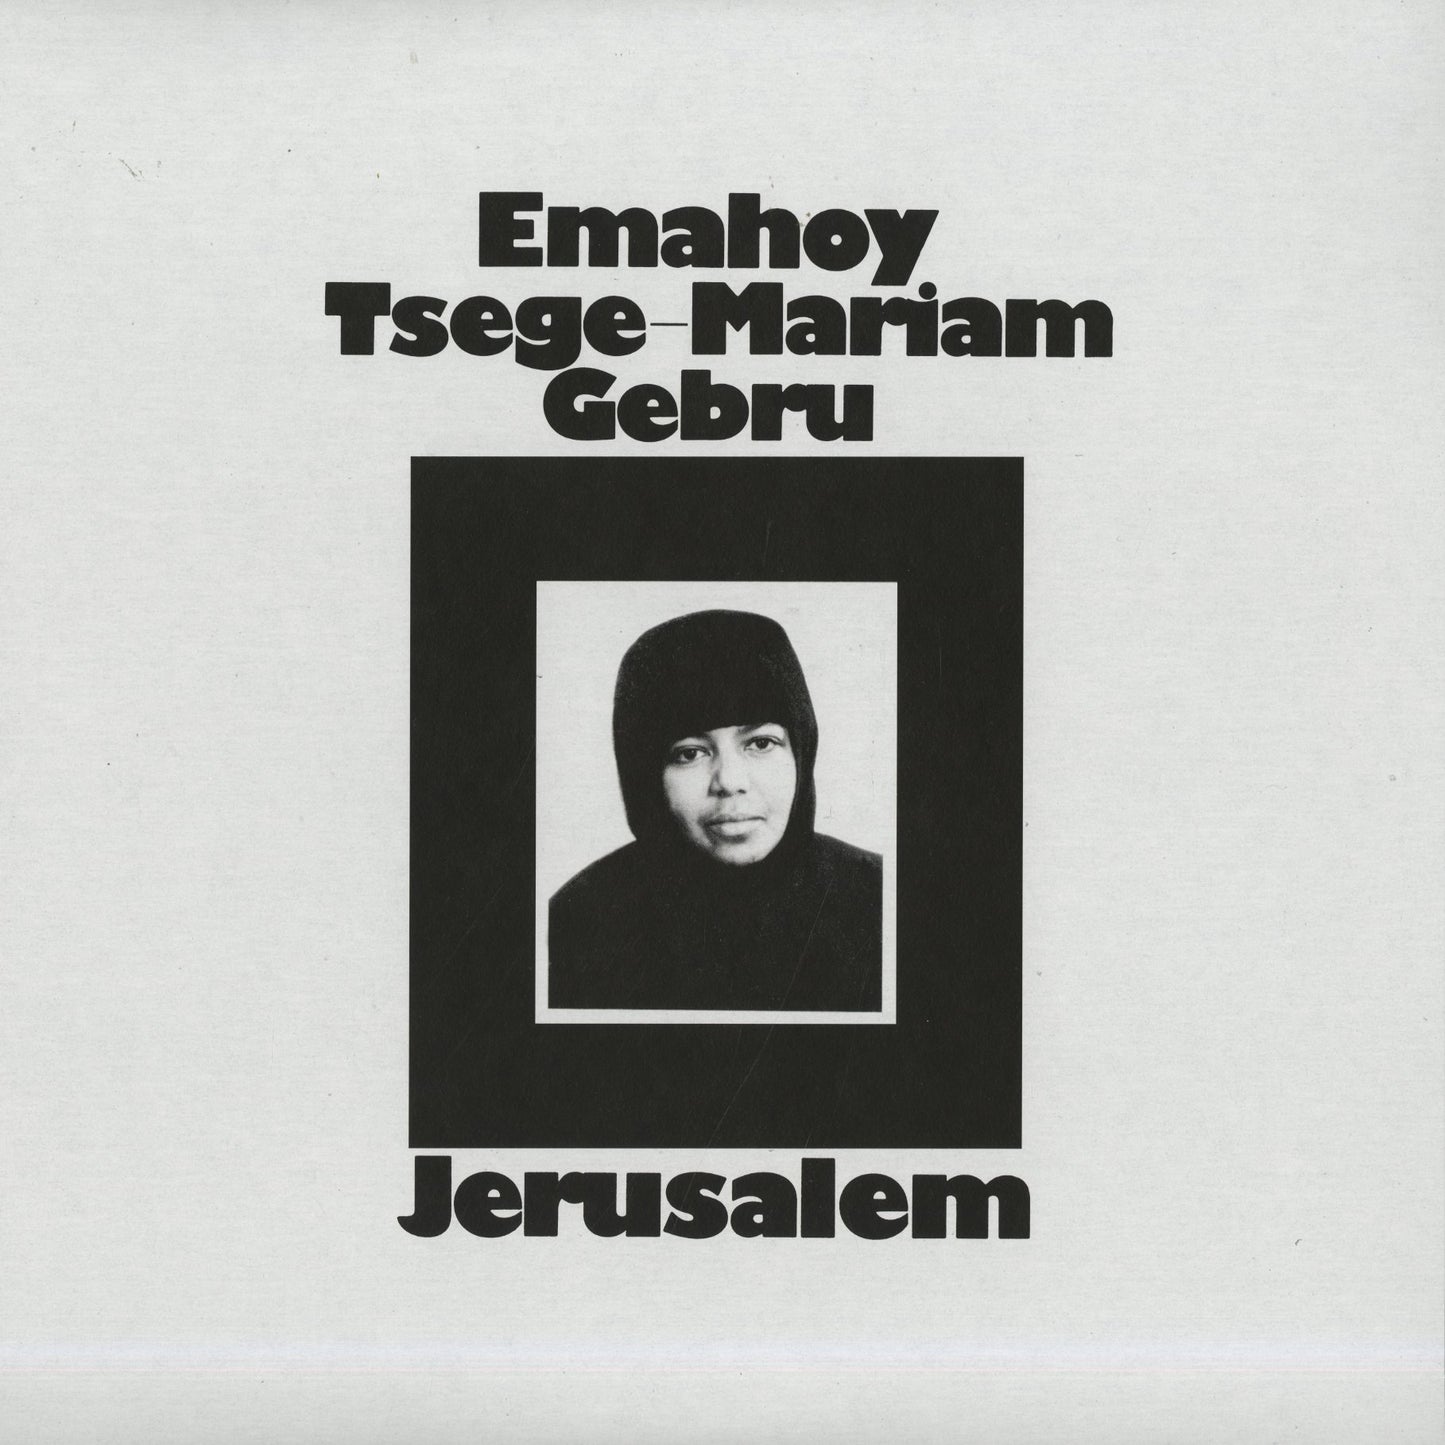 Emahoy Tsege Mariam Gebru / エマホイ・ツェゲ・マリアム・ゲブル / Jerusalem (MRI-200)